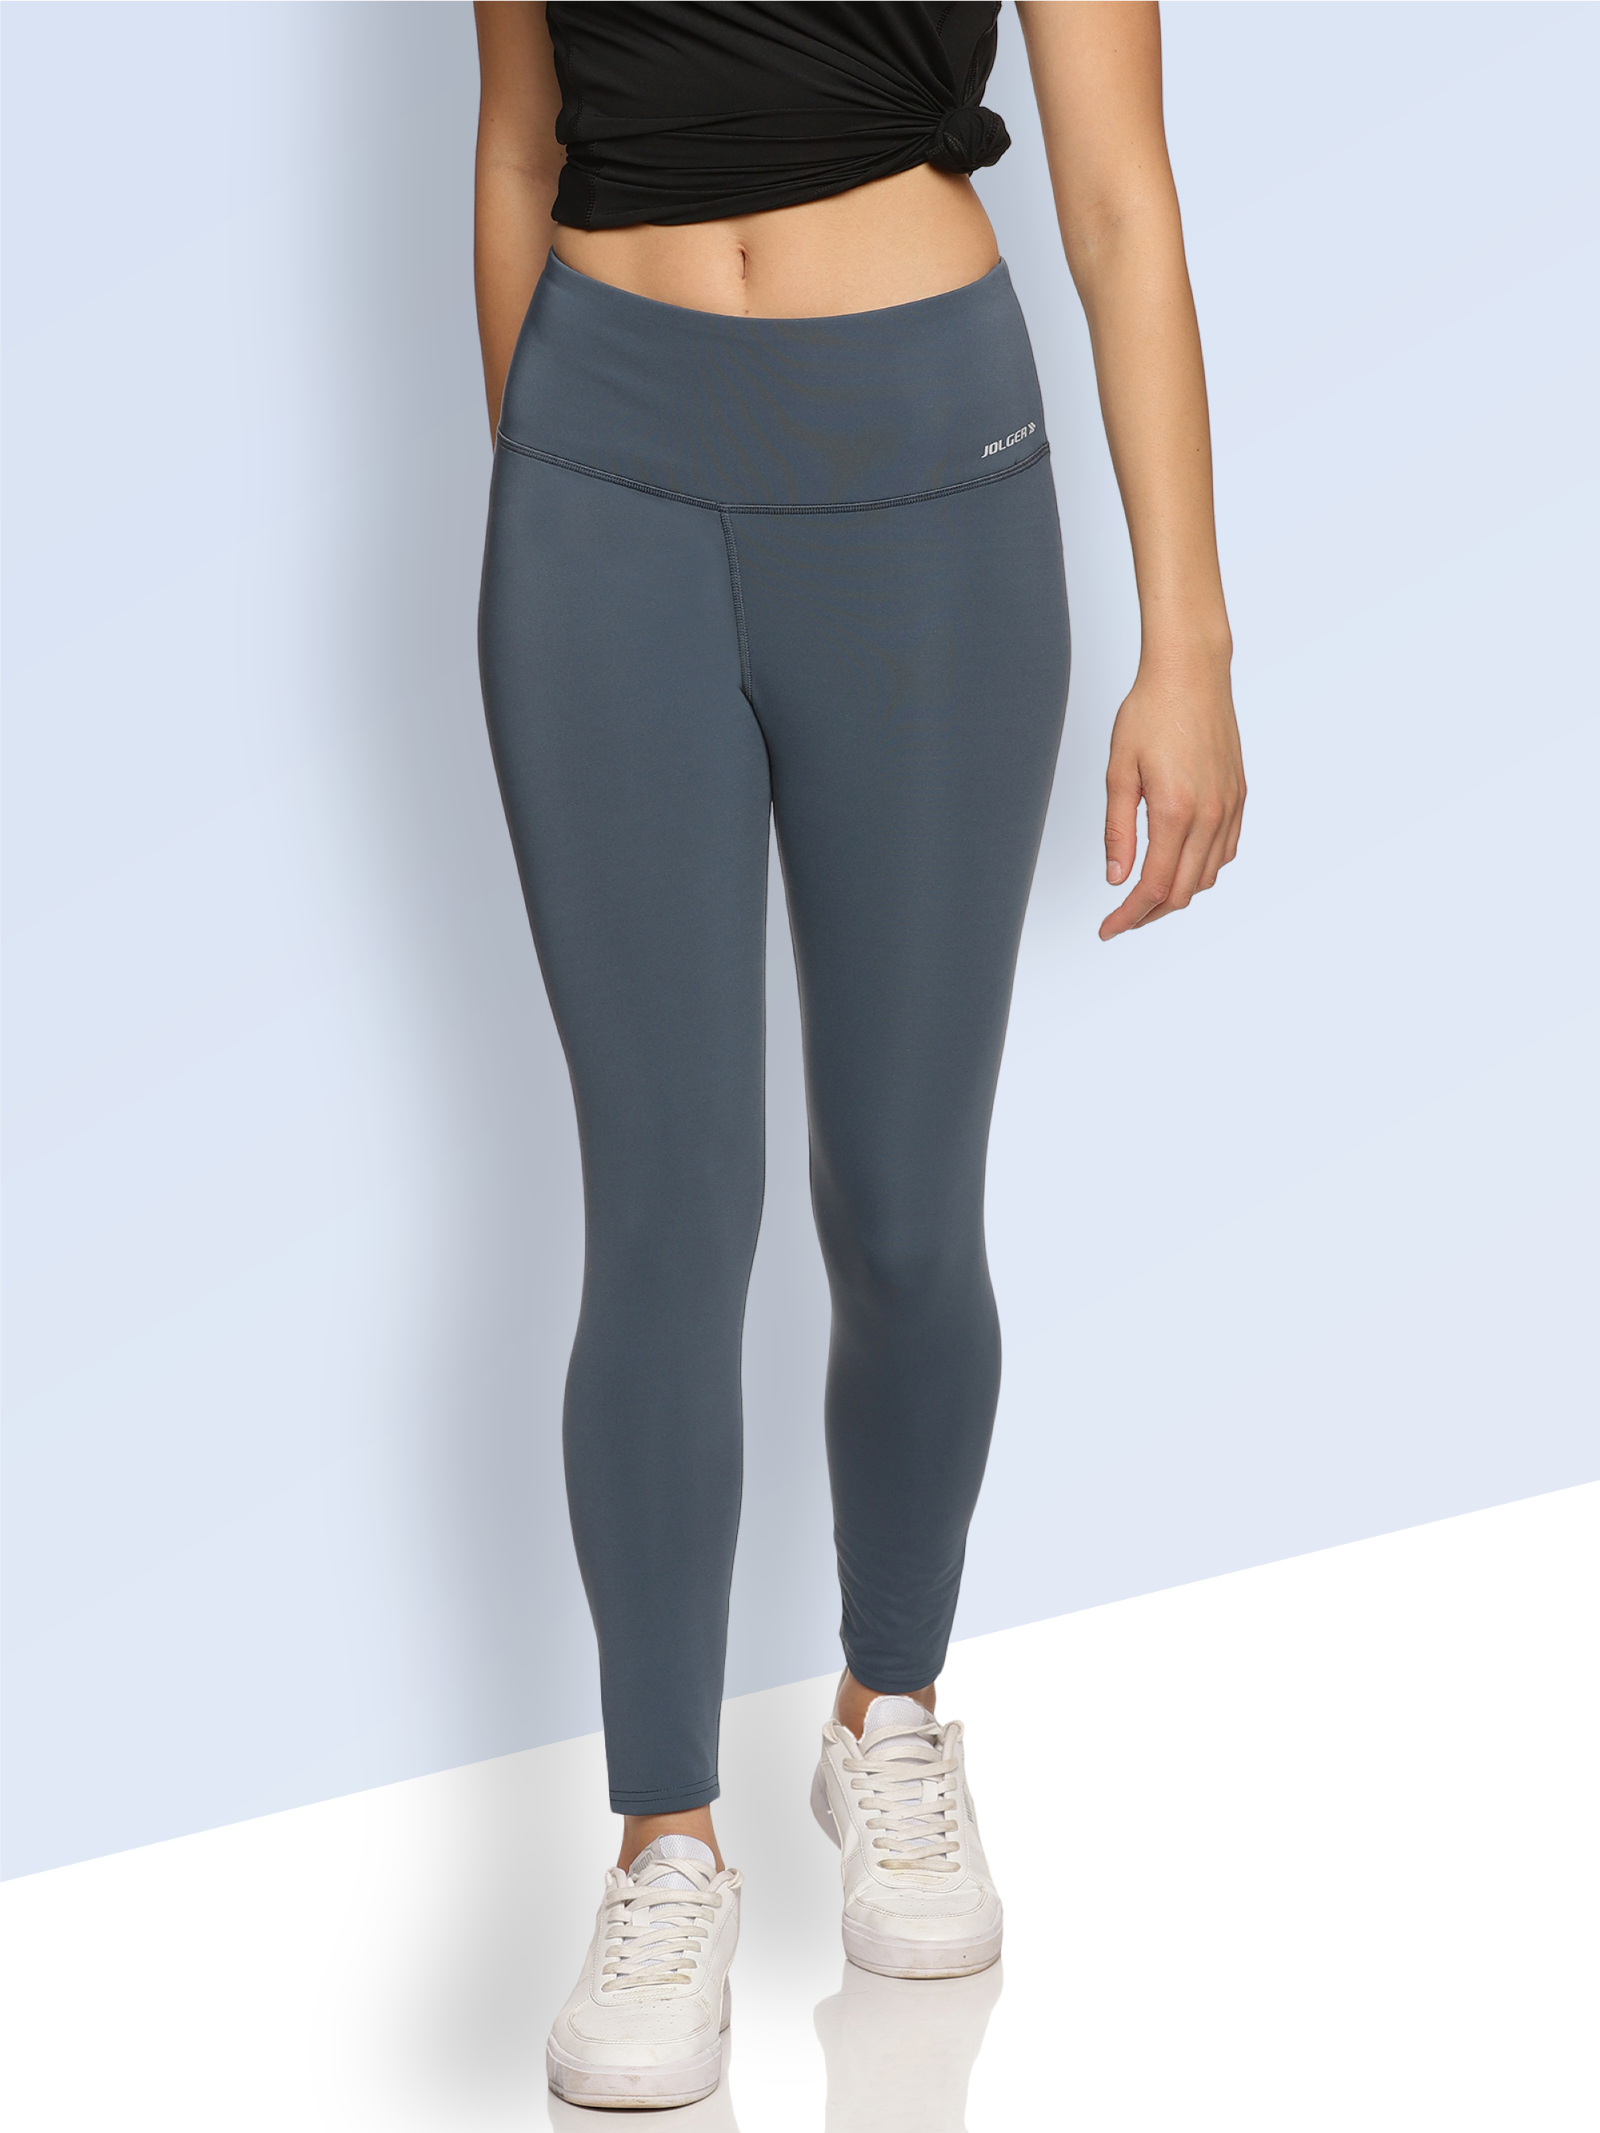 Buy AJ Fashion Women's Slim Fit Cotton Yoga Track Pants (AJ-F-1234_Black And  Dark Grey_Free Size) at Amazon.in